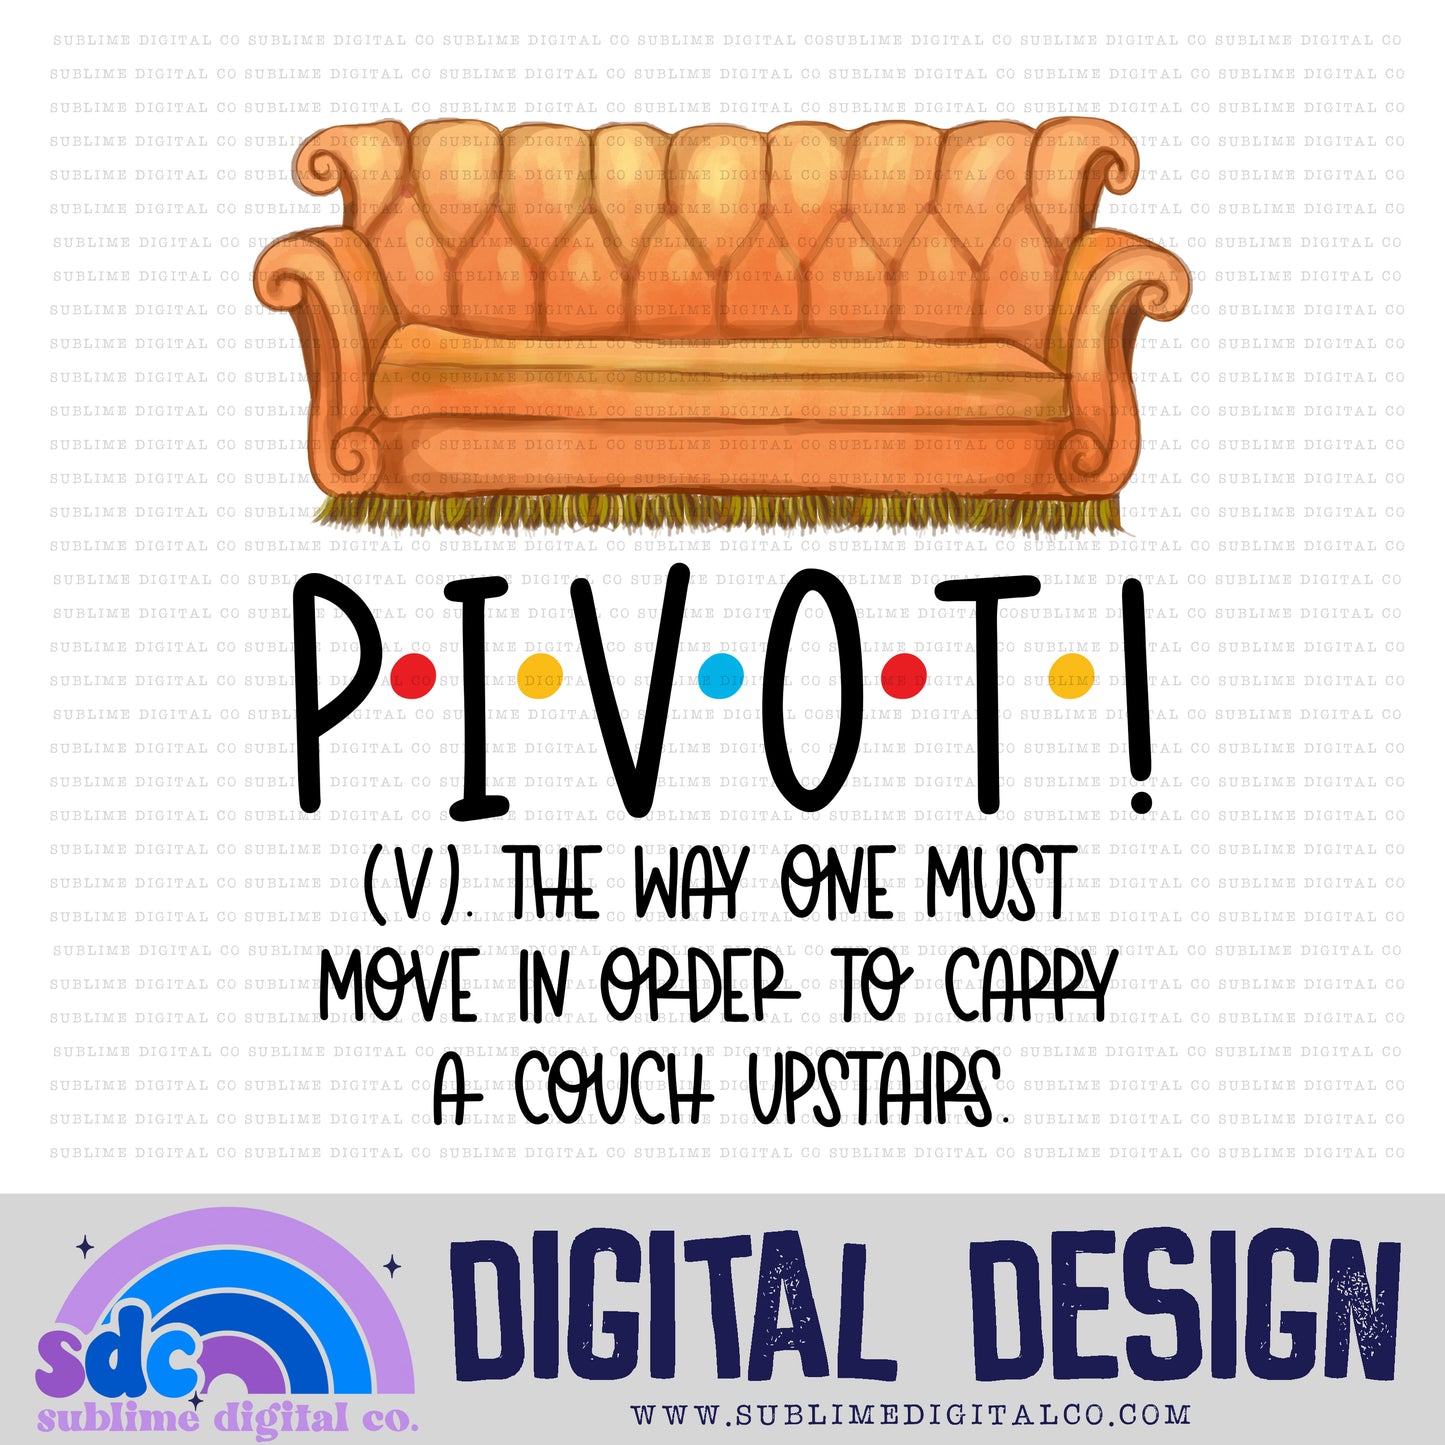 Pivot! • Cafe Group • Instant Download • Sublimation Design